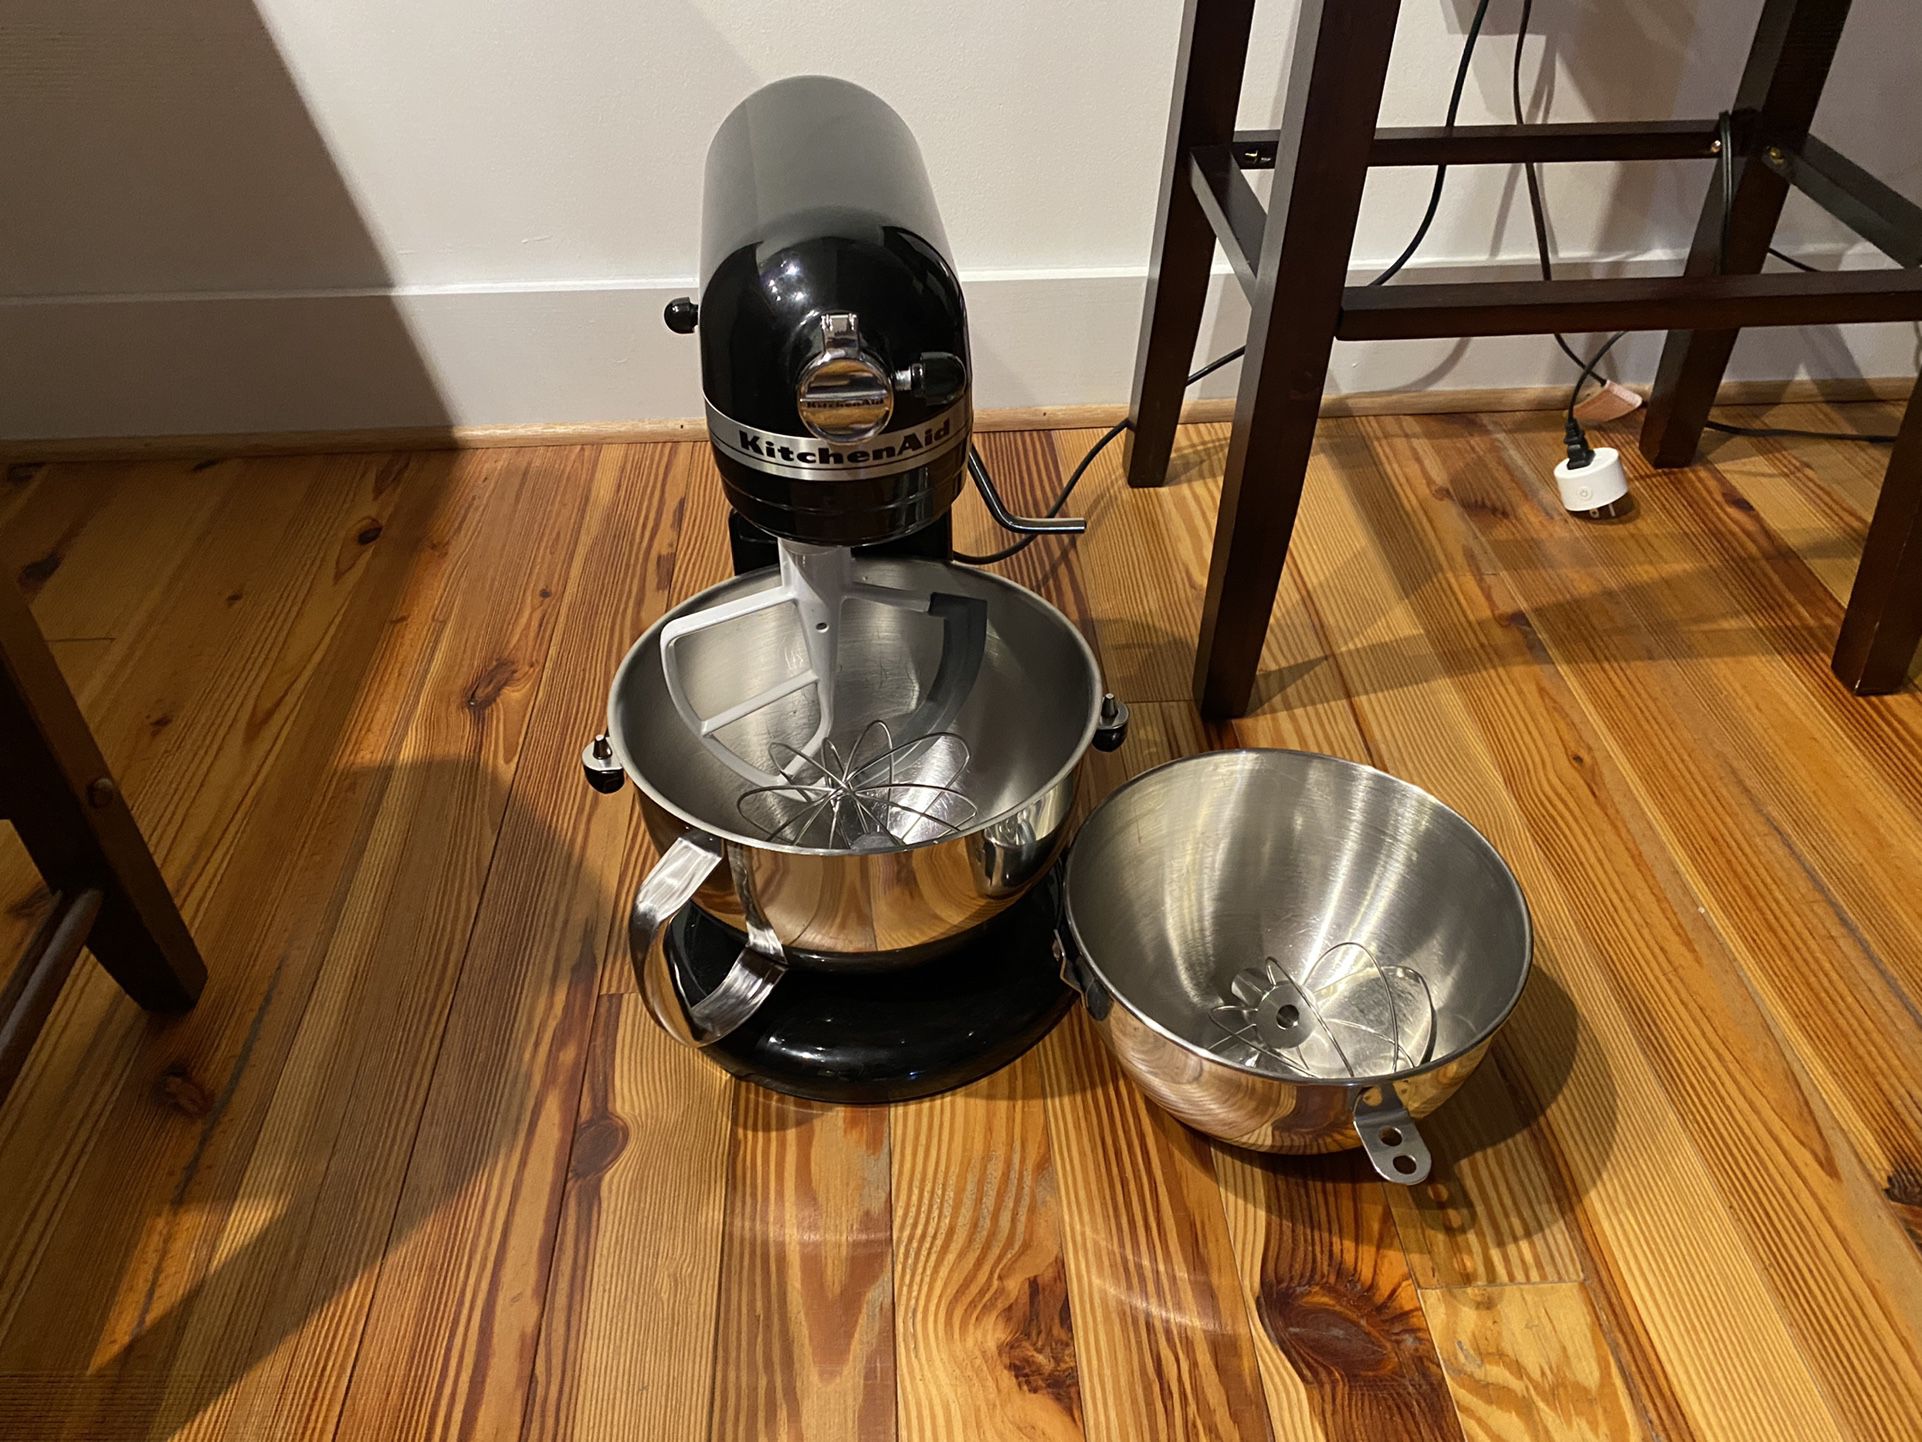 KitchenAid Professional 550 Plus-5.5 Quart Bowl-Lift Stand Mixer